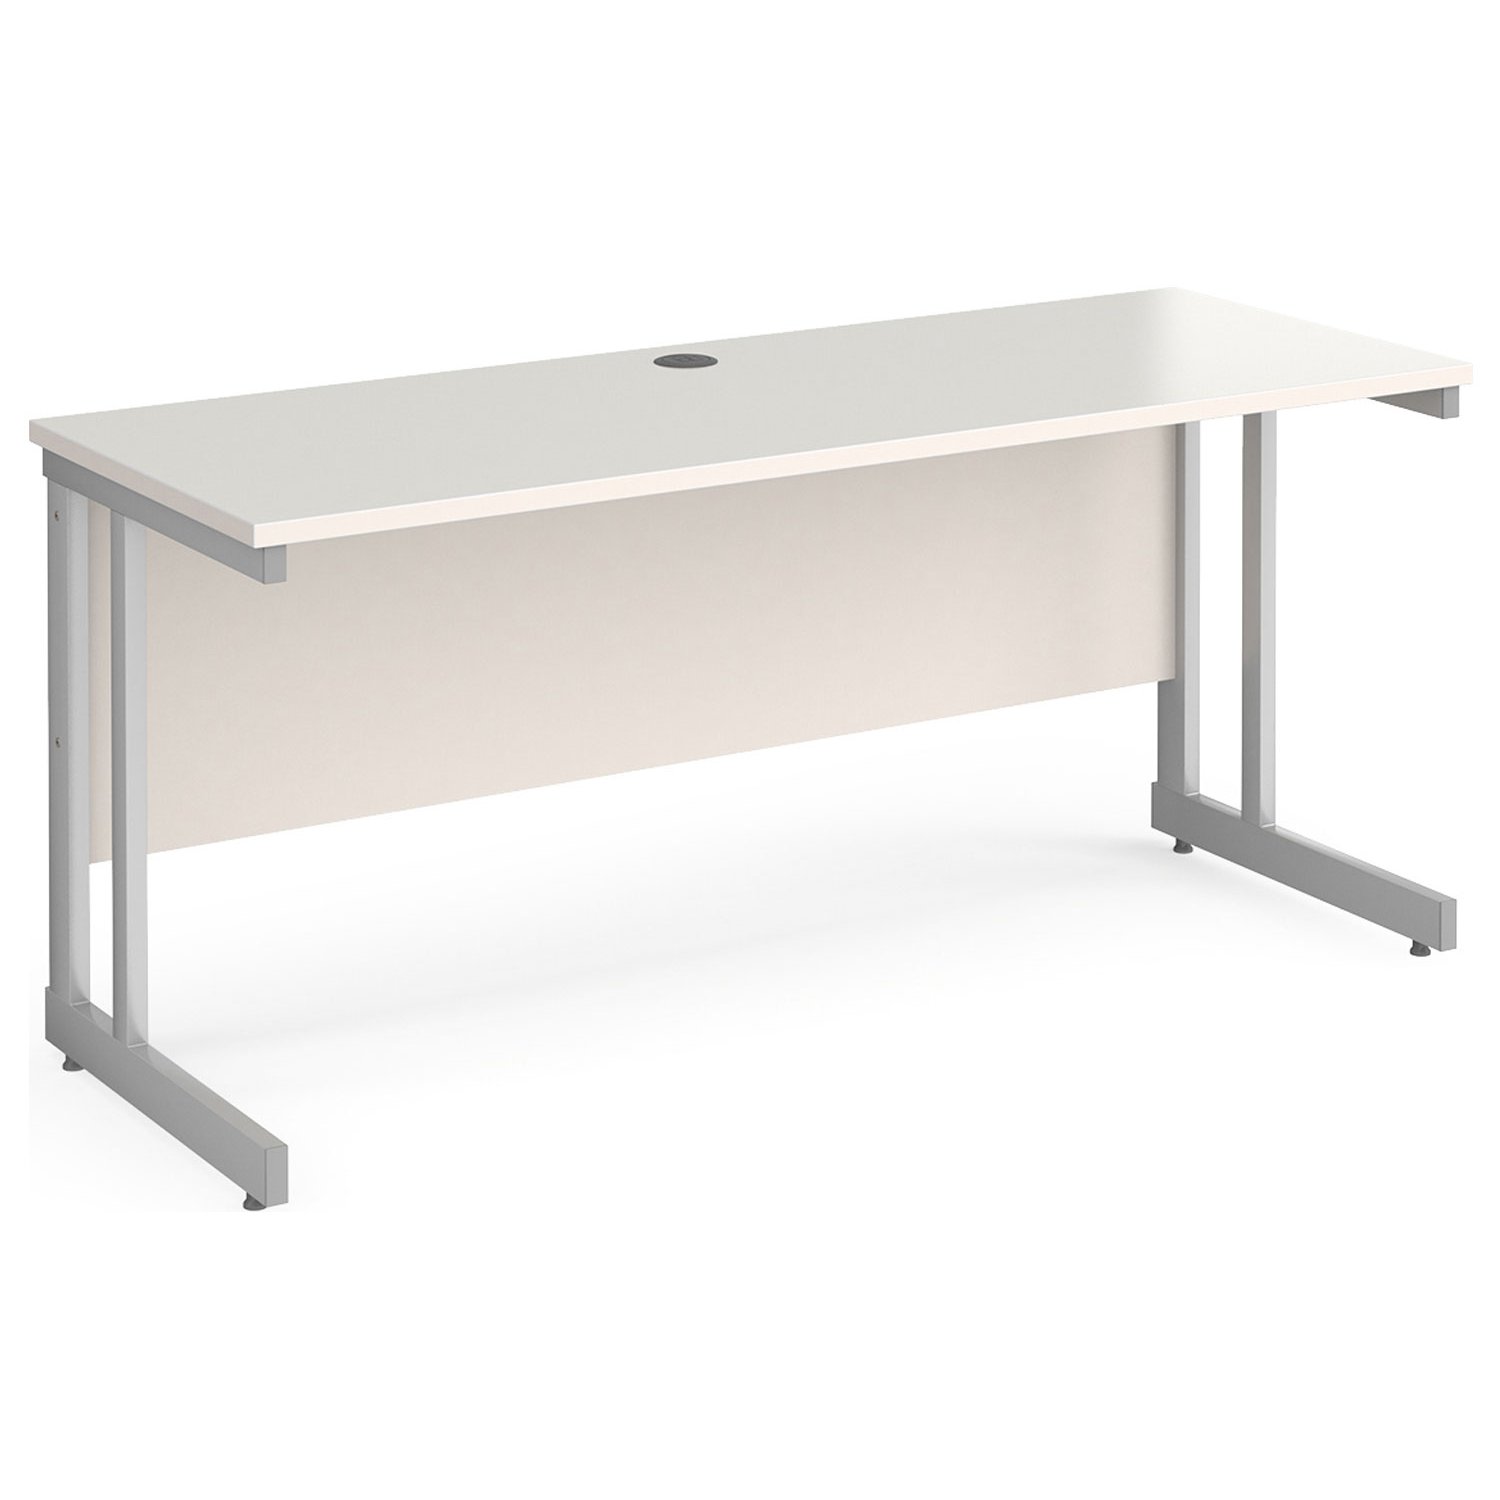 Tully II Narrow Rectangular Desk, 160wx60dx73h (cm), White